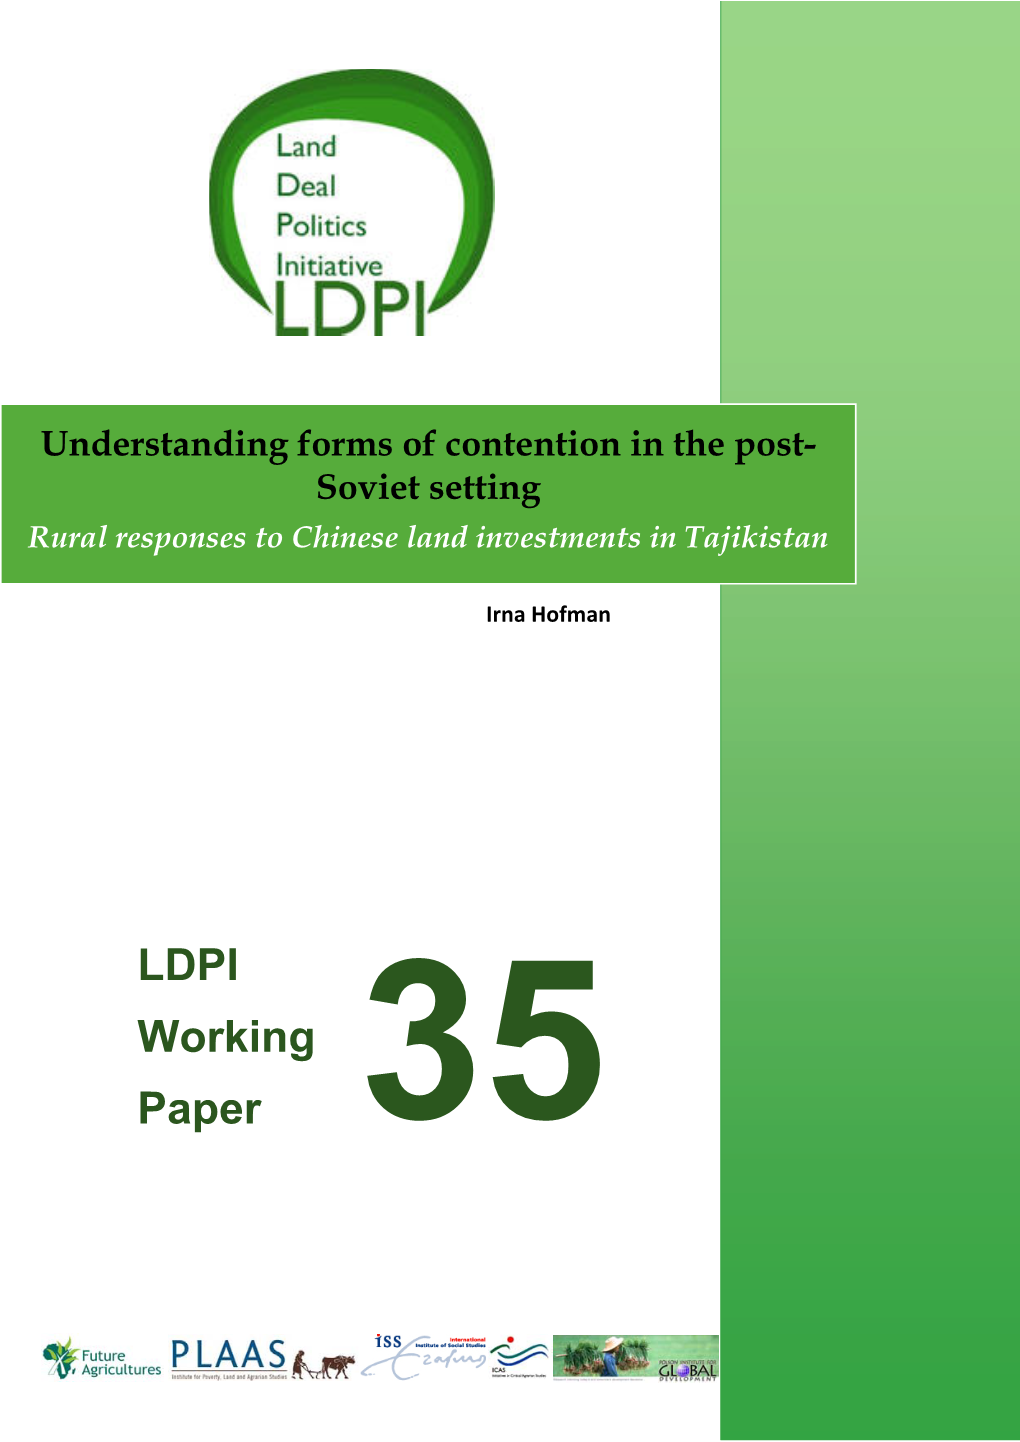 LDPI Working Paper